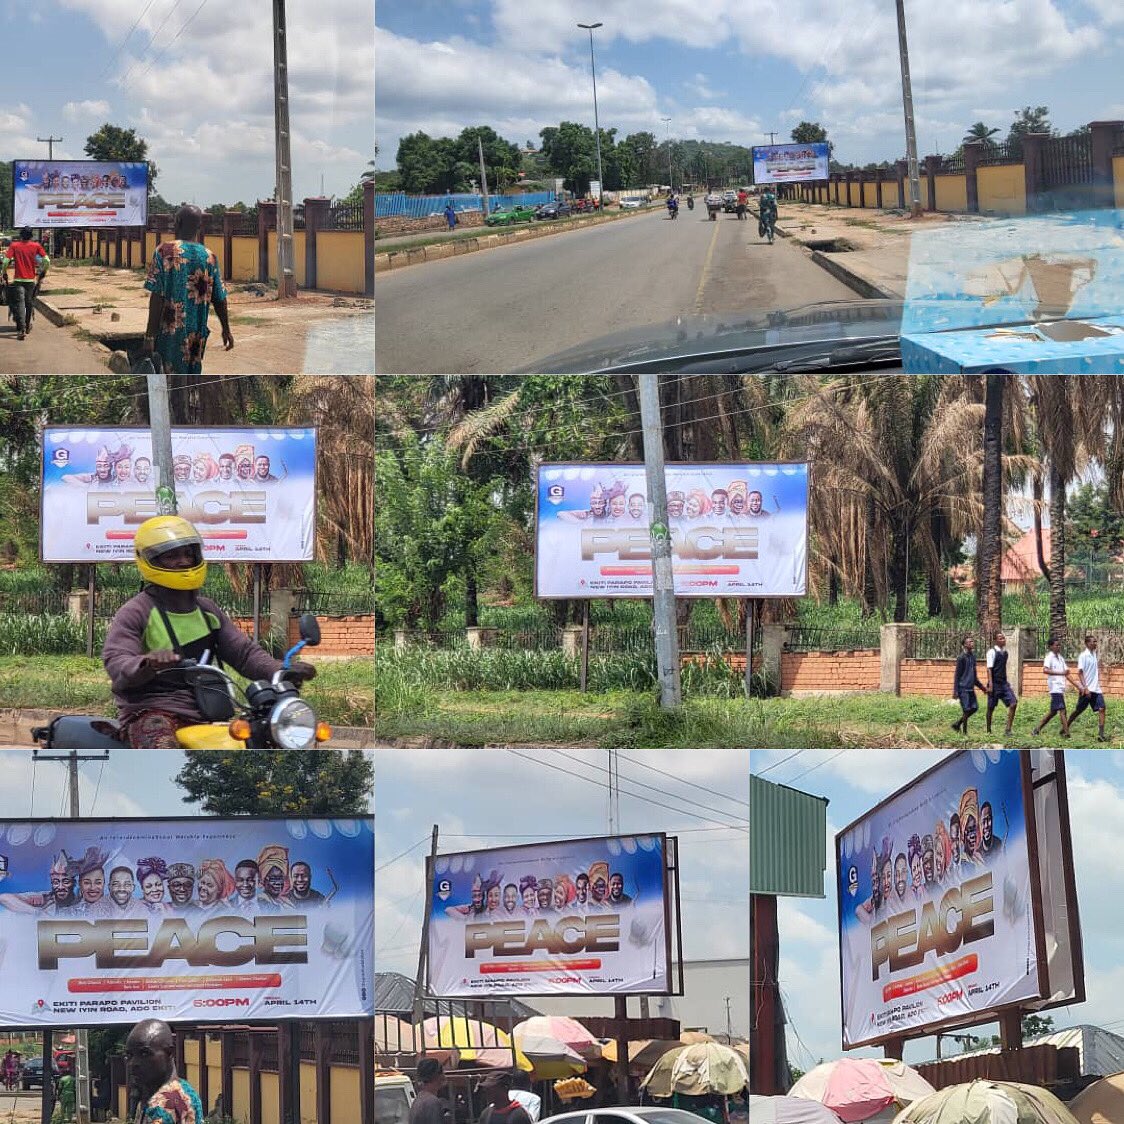 Tell us if you have seen our billboards 

#EPC2023 
#TheGratitudeEkiti 
#EkitiPeaceConcert2